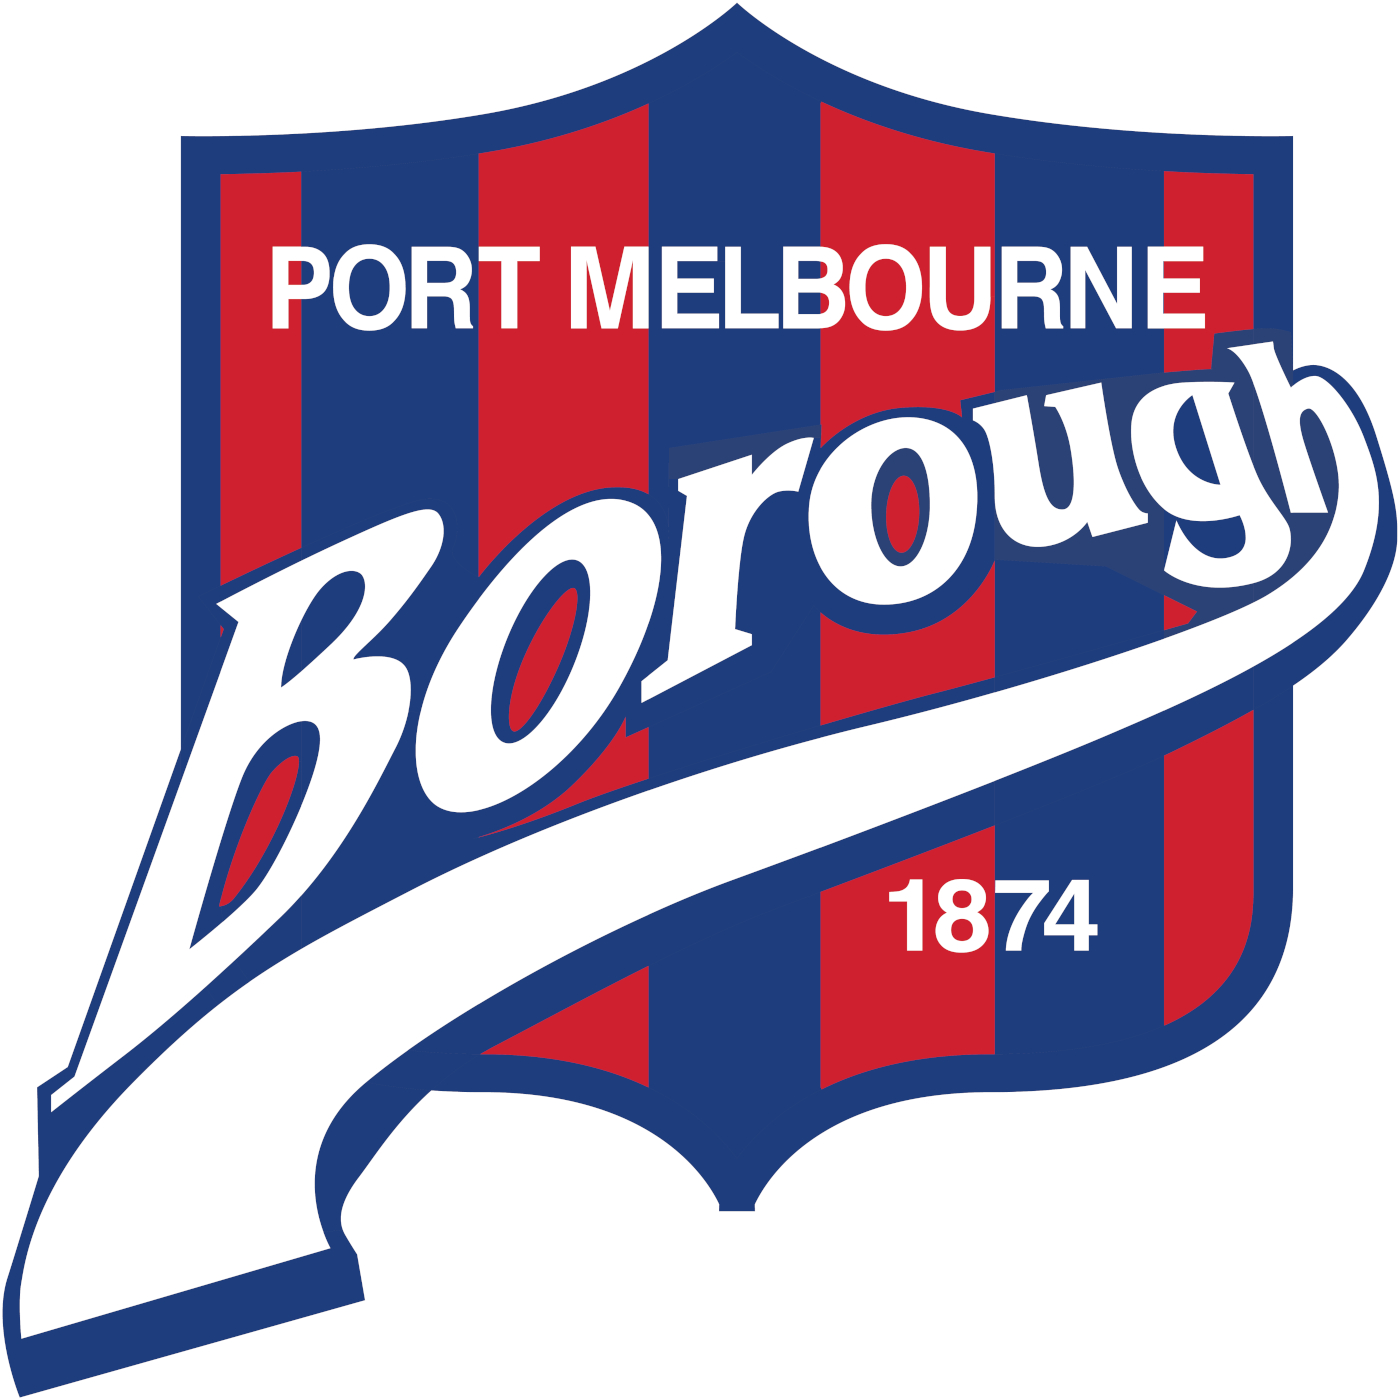 Port Melbourne Borough Podcast Episode 4.